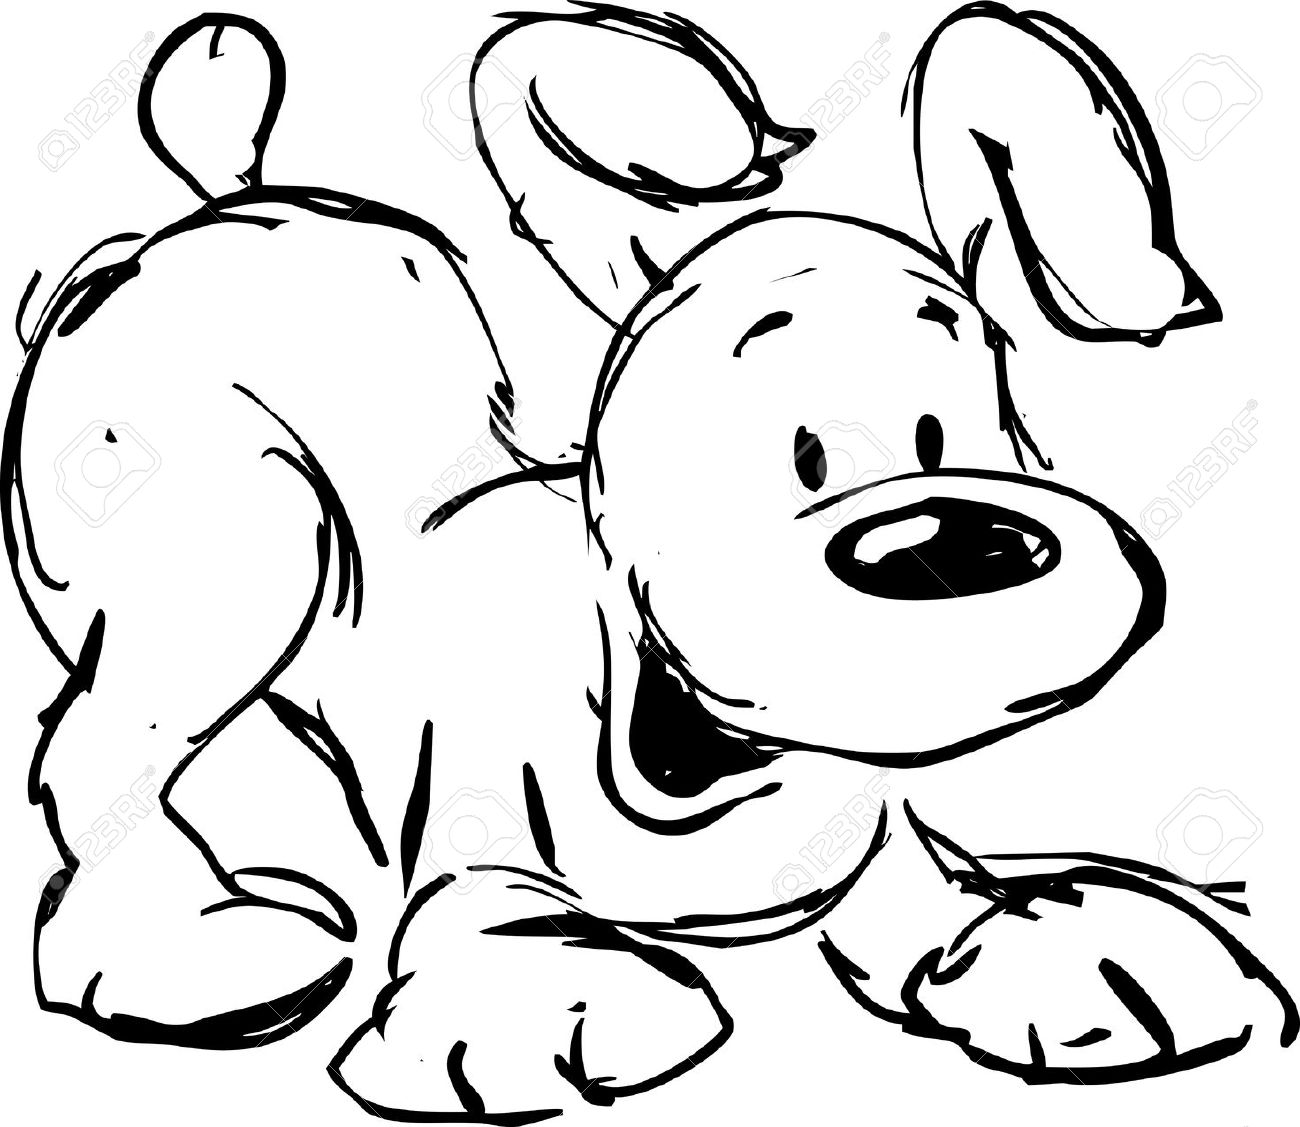 Dog Sketch Clipart Black And White. dog sketch: cute dog .